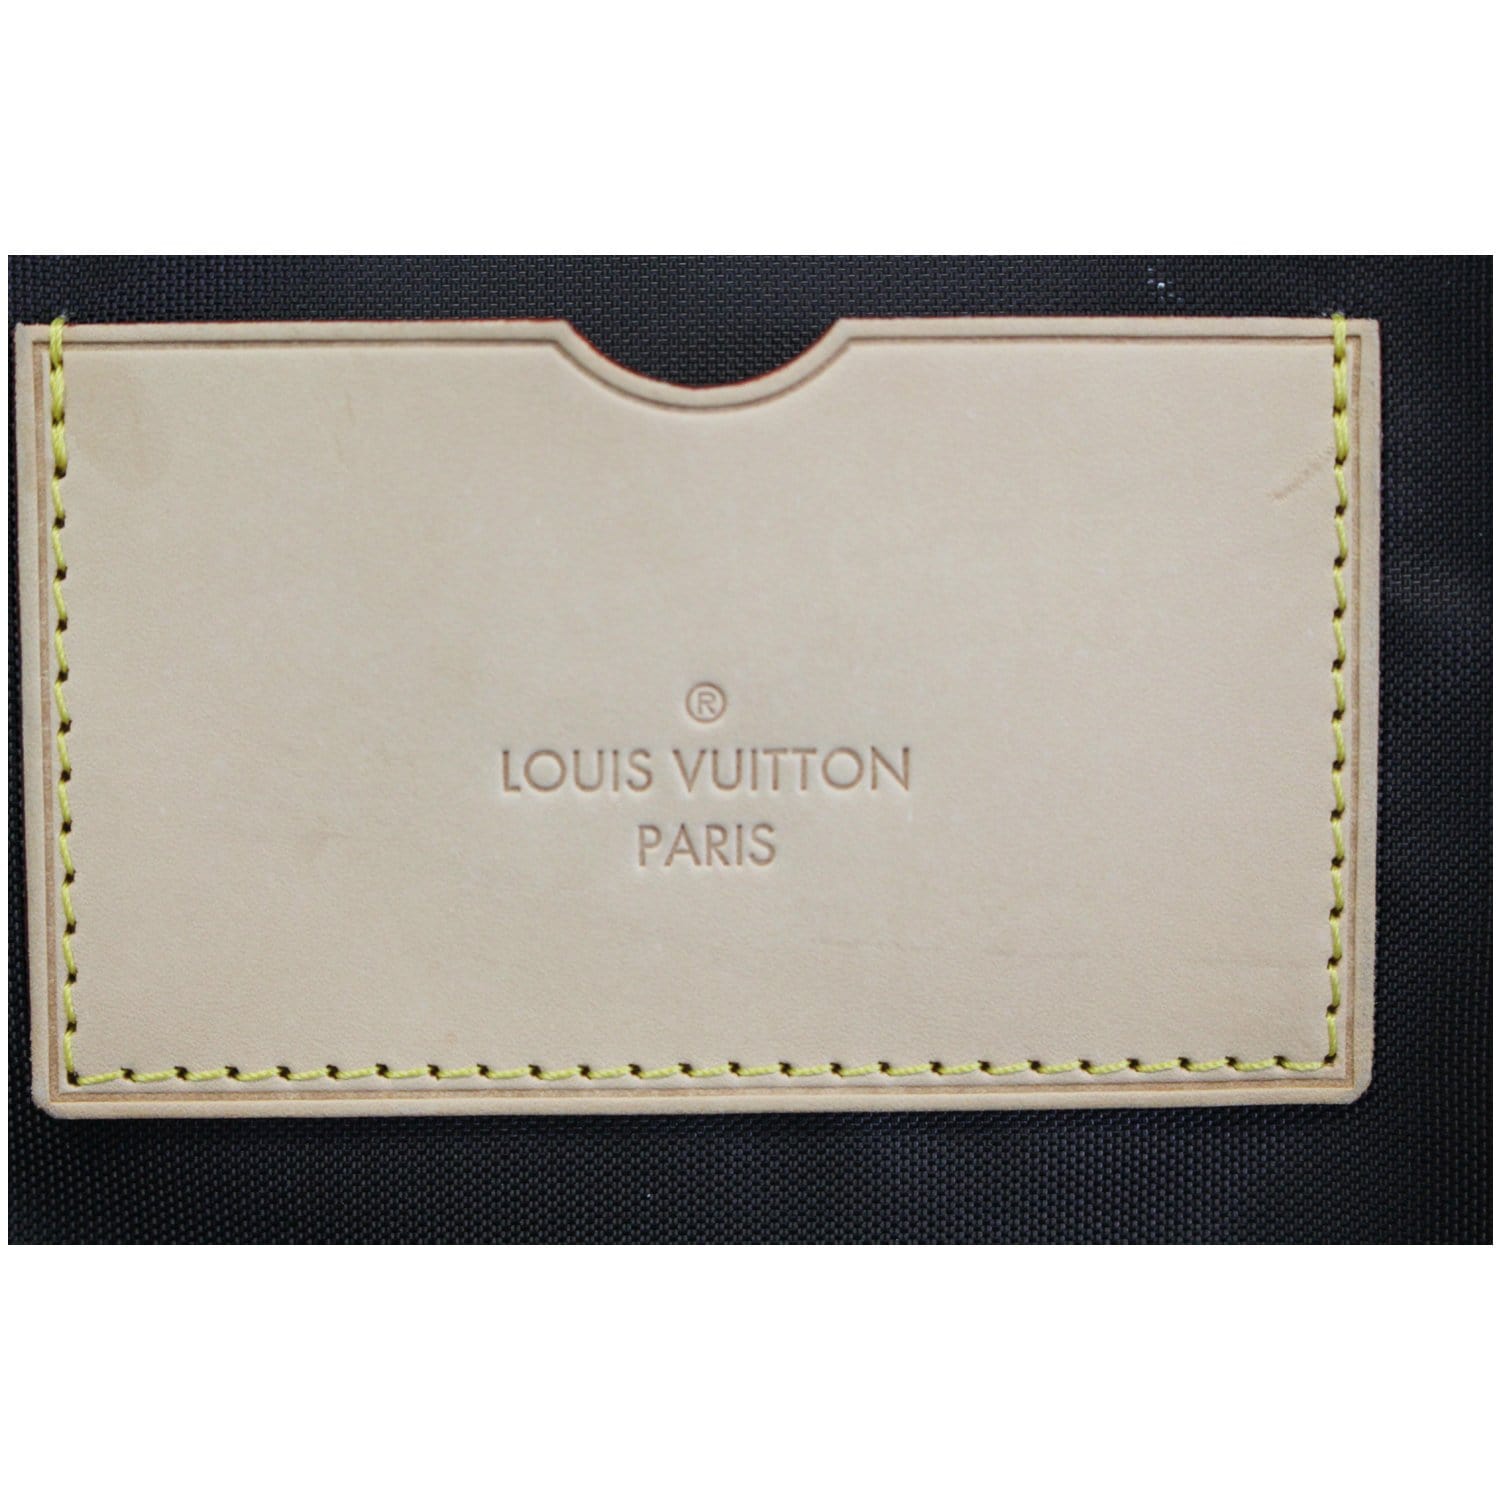 Sold at Auction: Louis Vuitton, Pegase 55 Cabin Suitcase in brown monogram.  Excellent condition. 60cm high.